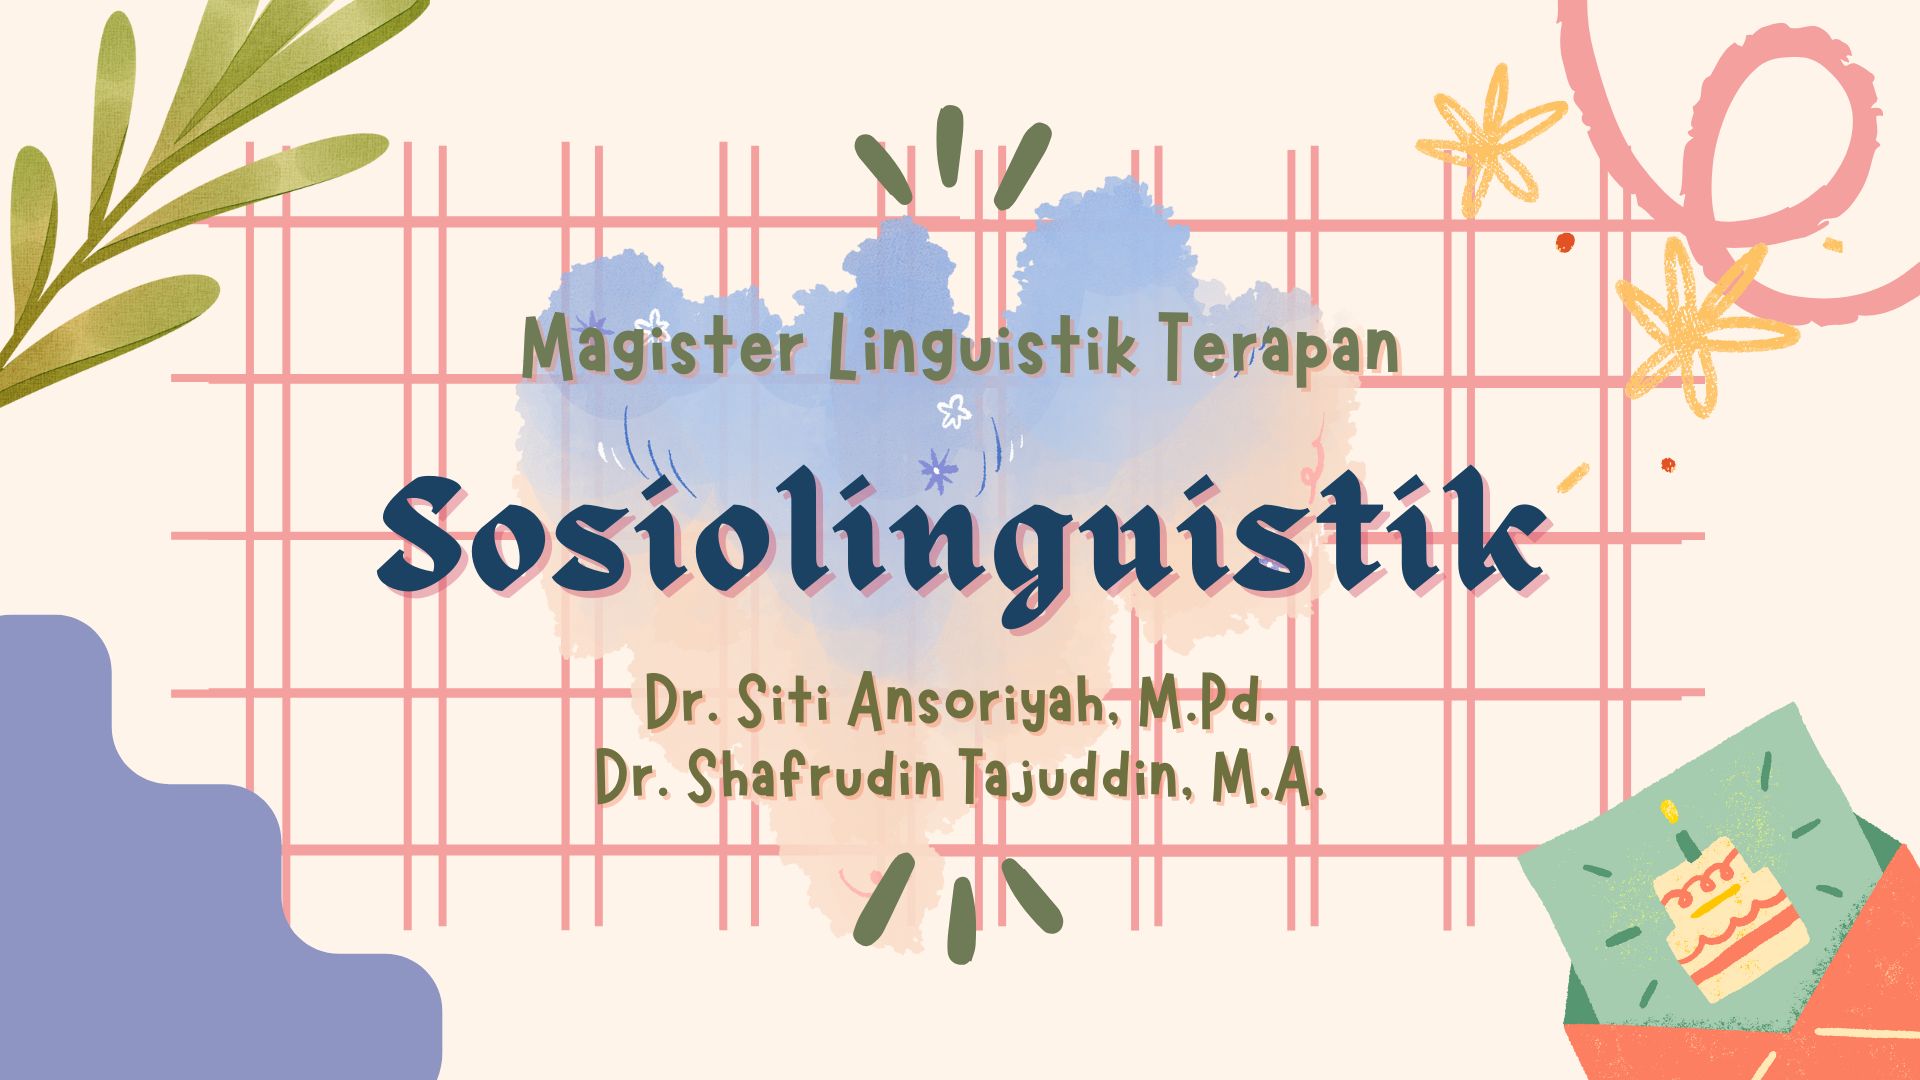 Sosiolinguistik Magister Linguistik Terapan 119 (Dr. Siti Ansoriyah, M.Pd. Dr. Shafrudin Tajuddin, M.A)